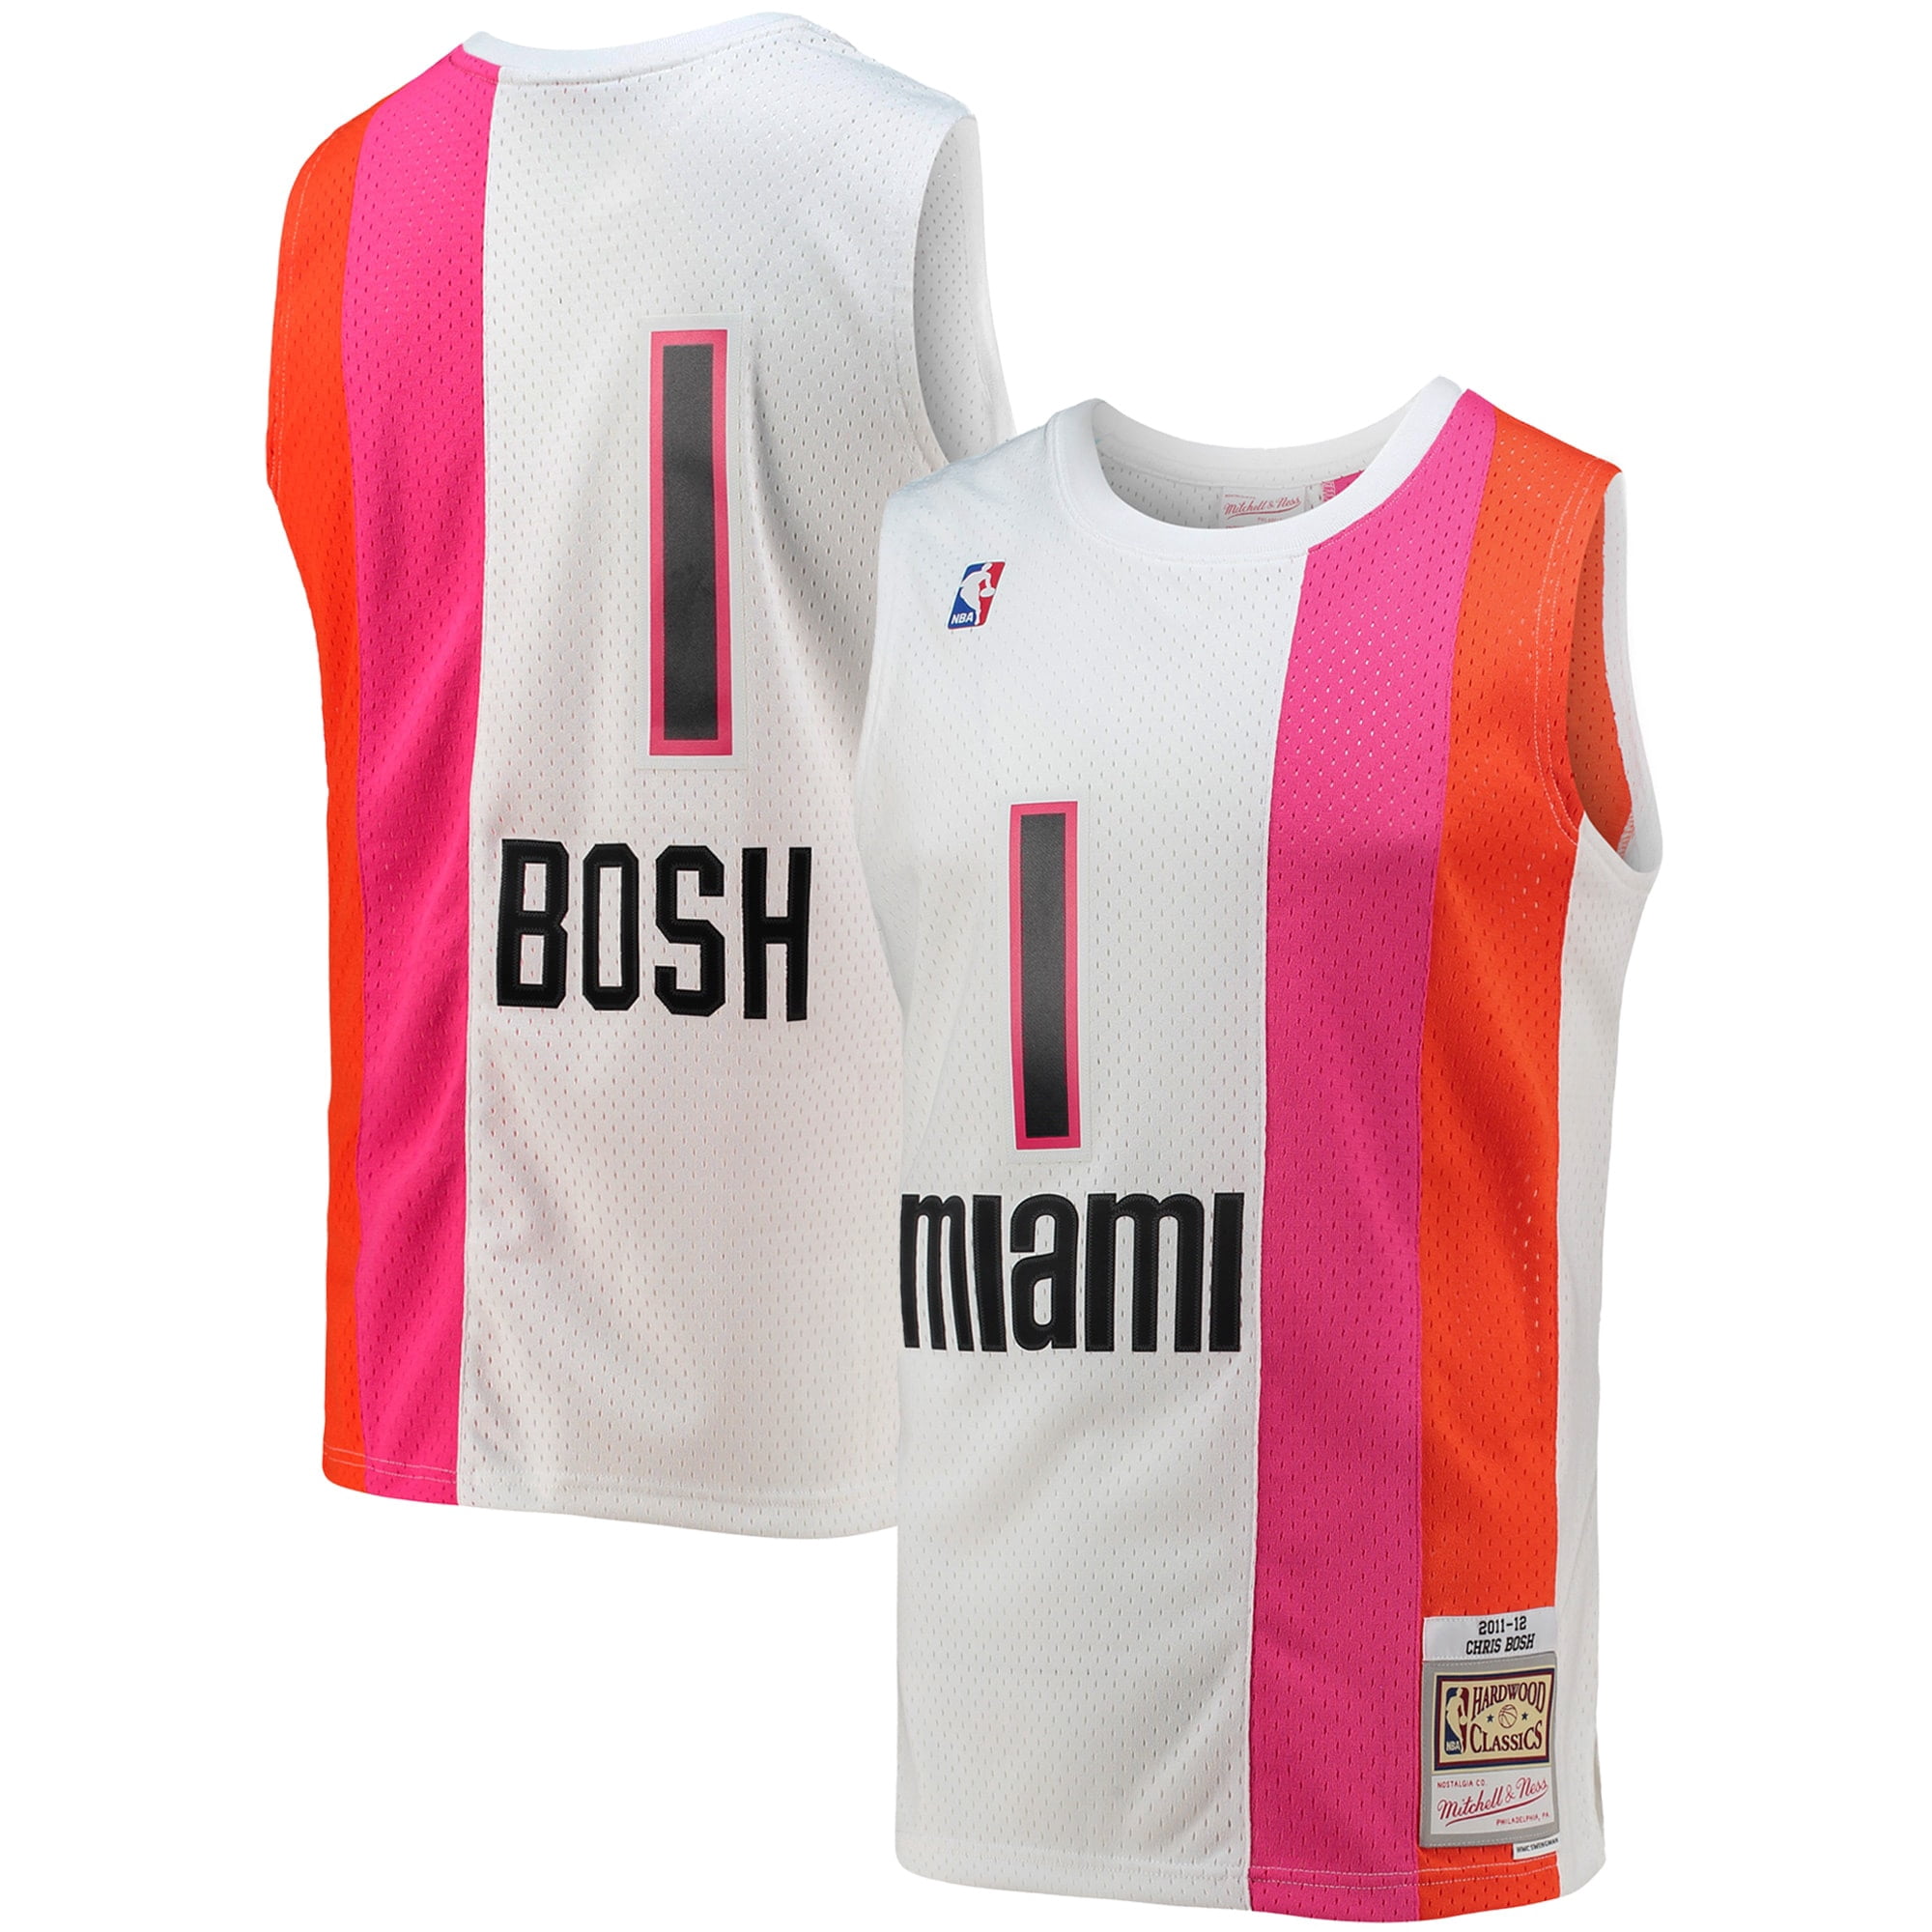 Miami Heat White NBA Jerseys for sale